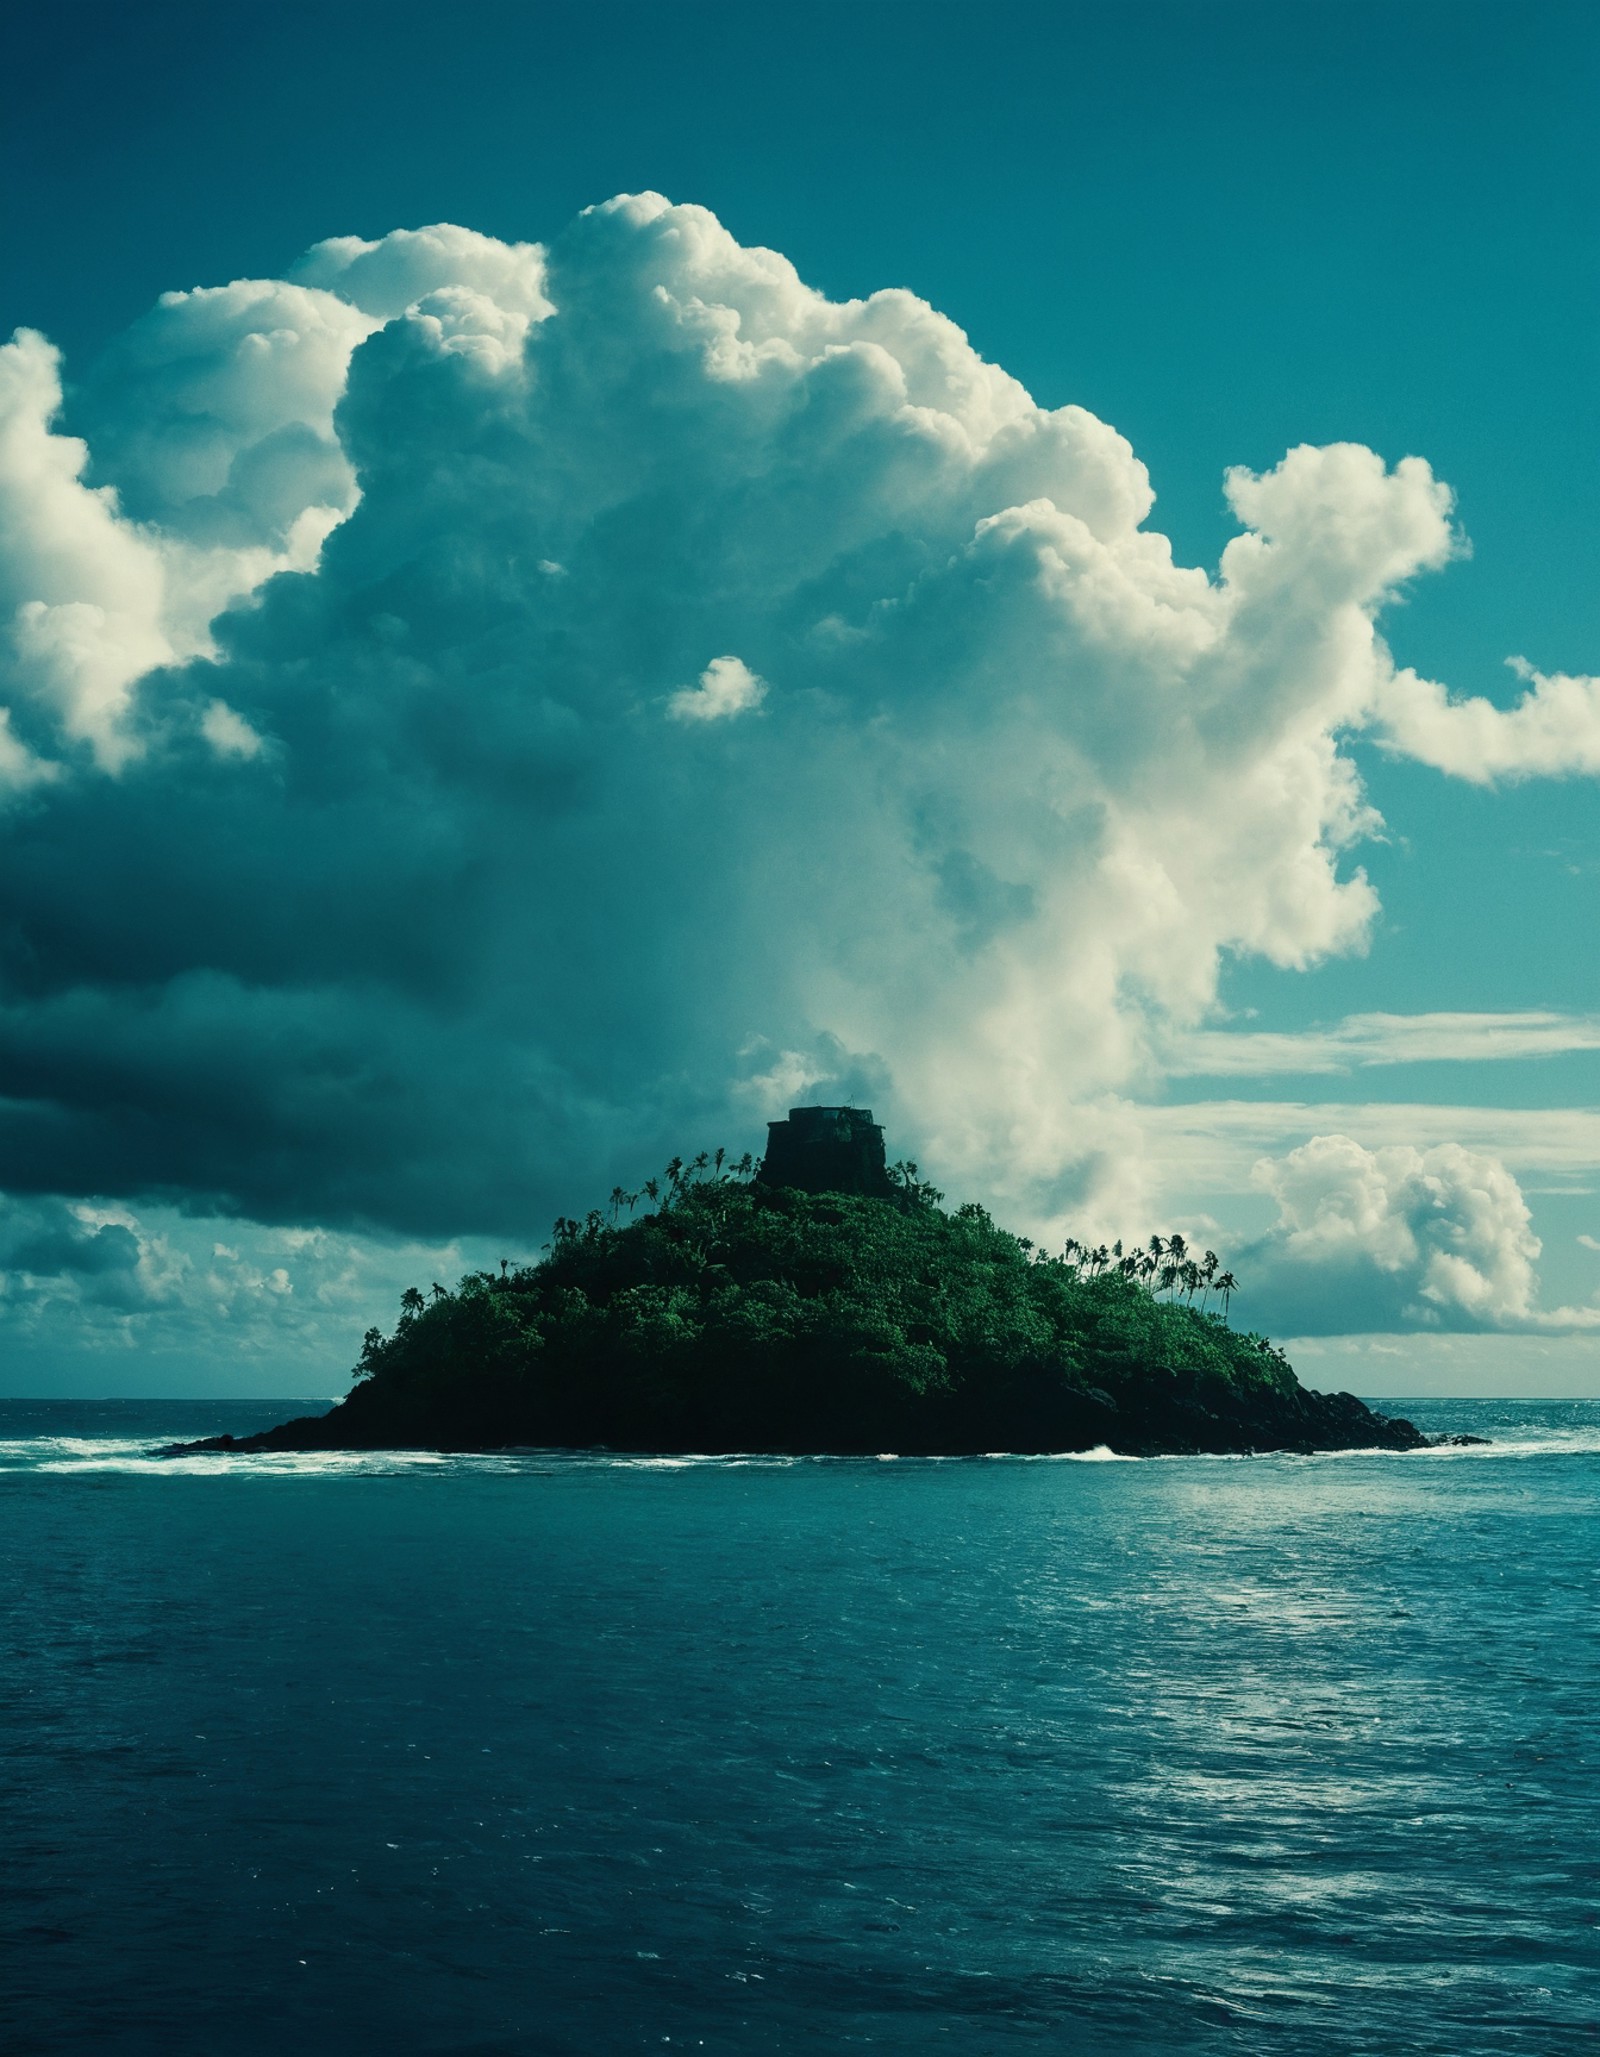 movie still, ocean, clouds, island, epic, film grain